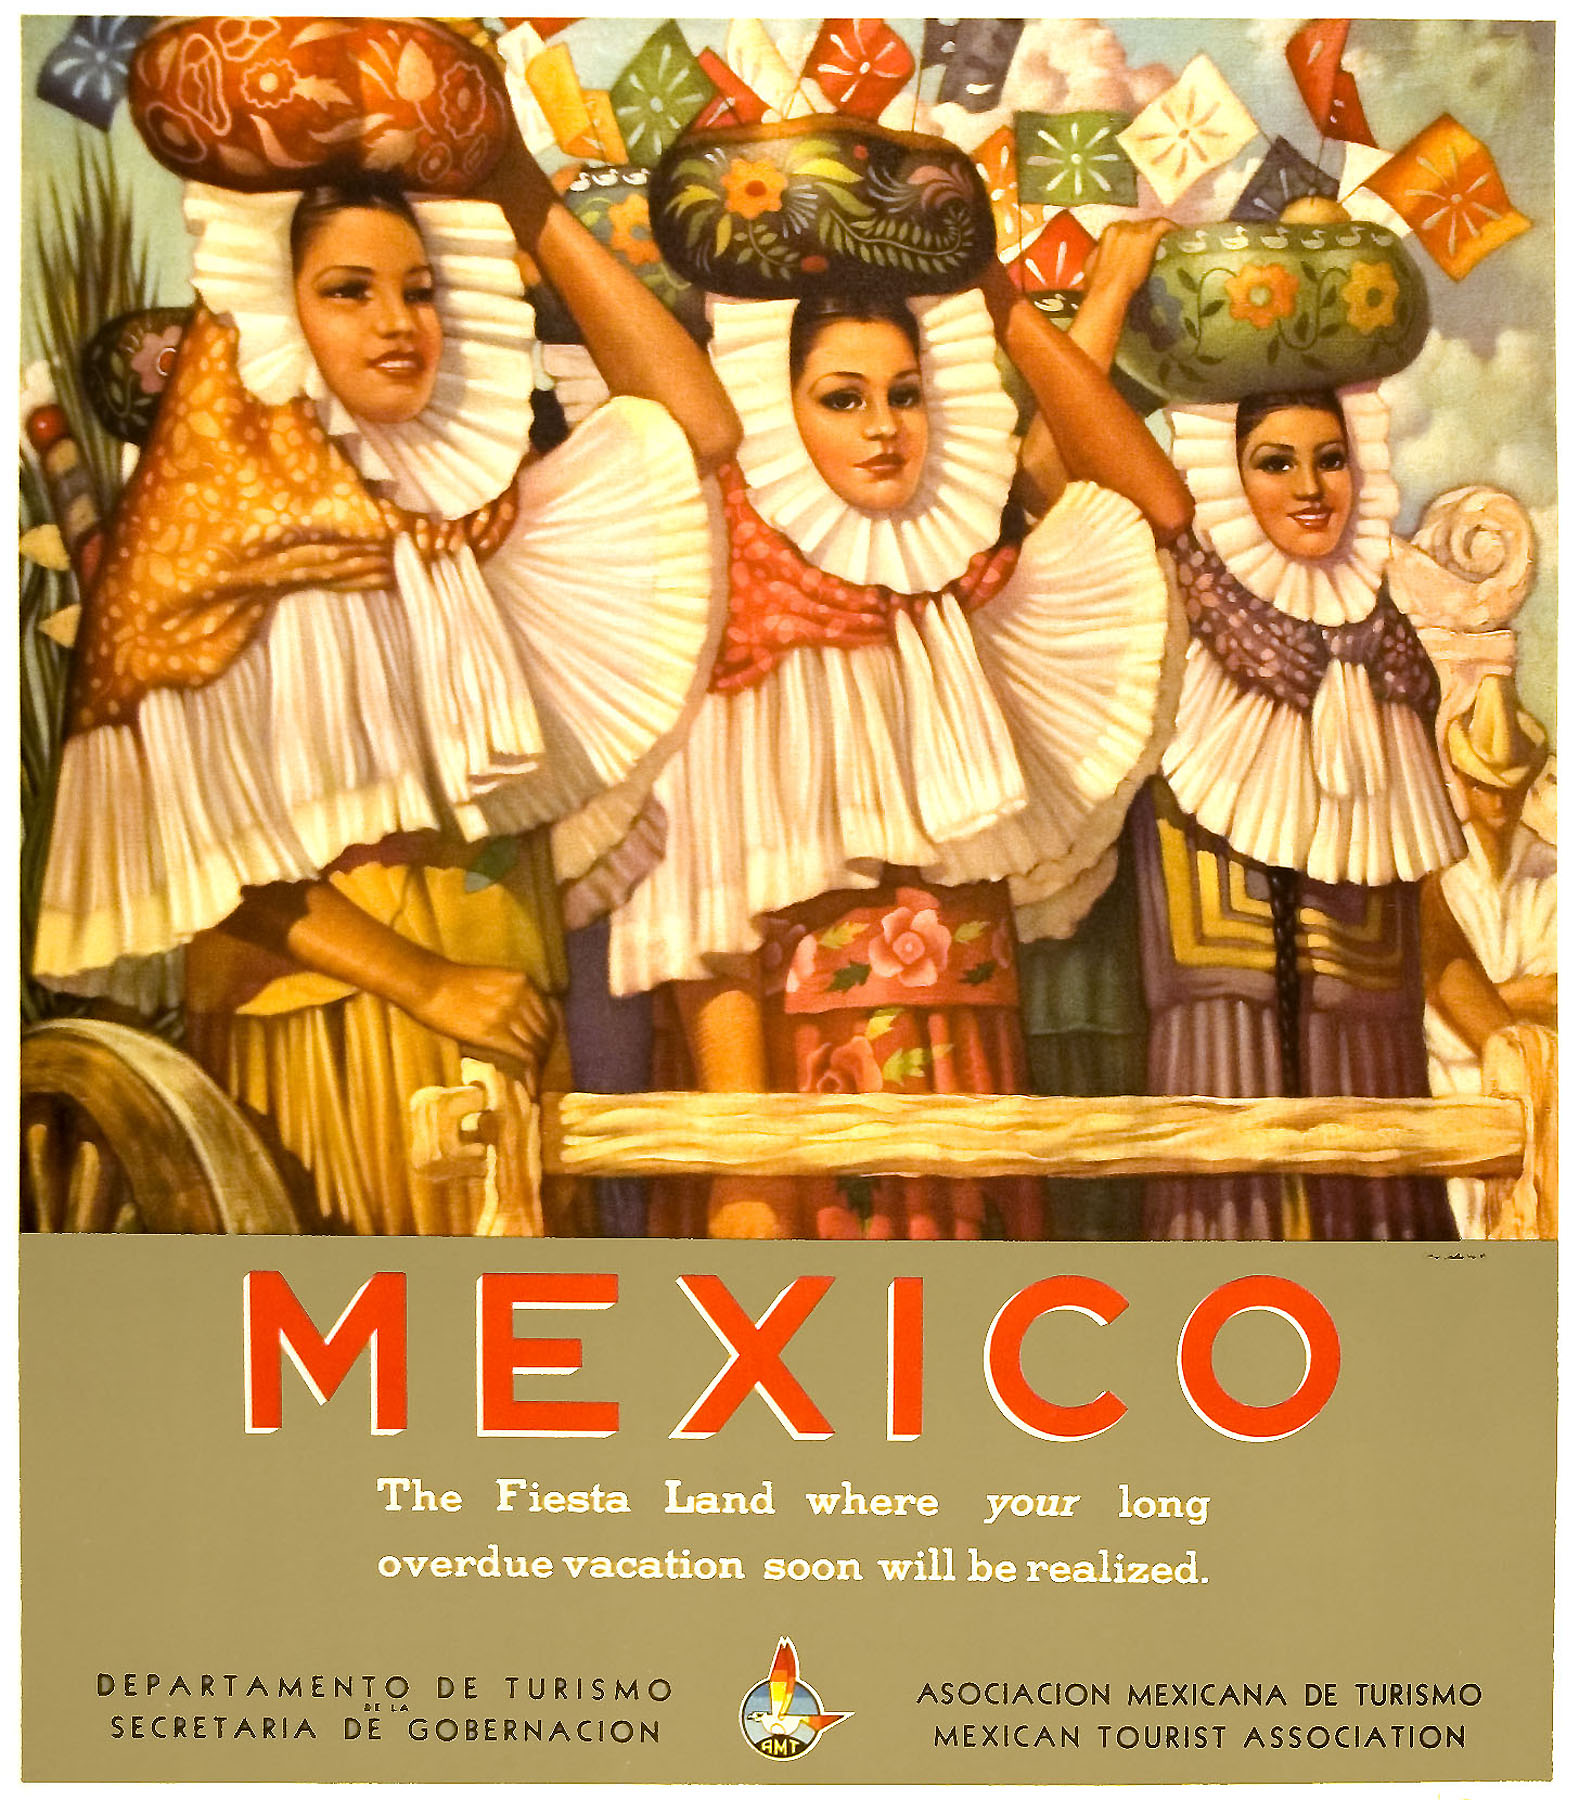 Mexico - The Fiesta Land